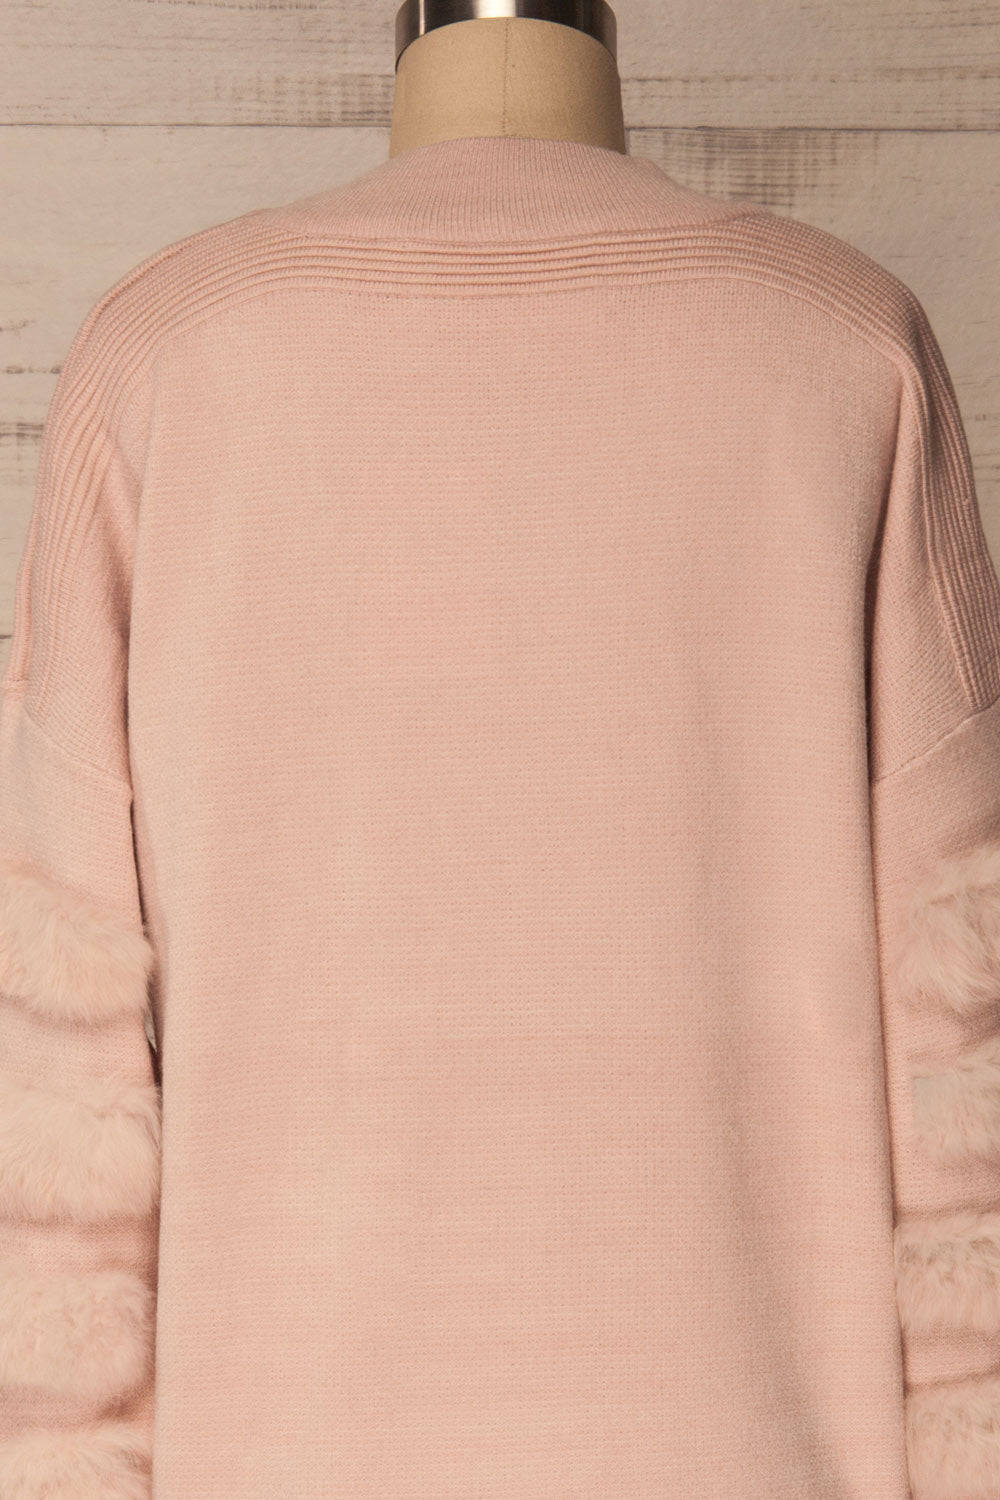 Néchin Rosa Pink Oversized Knit Sweater | La Petite Garçonne 7